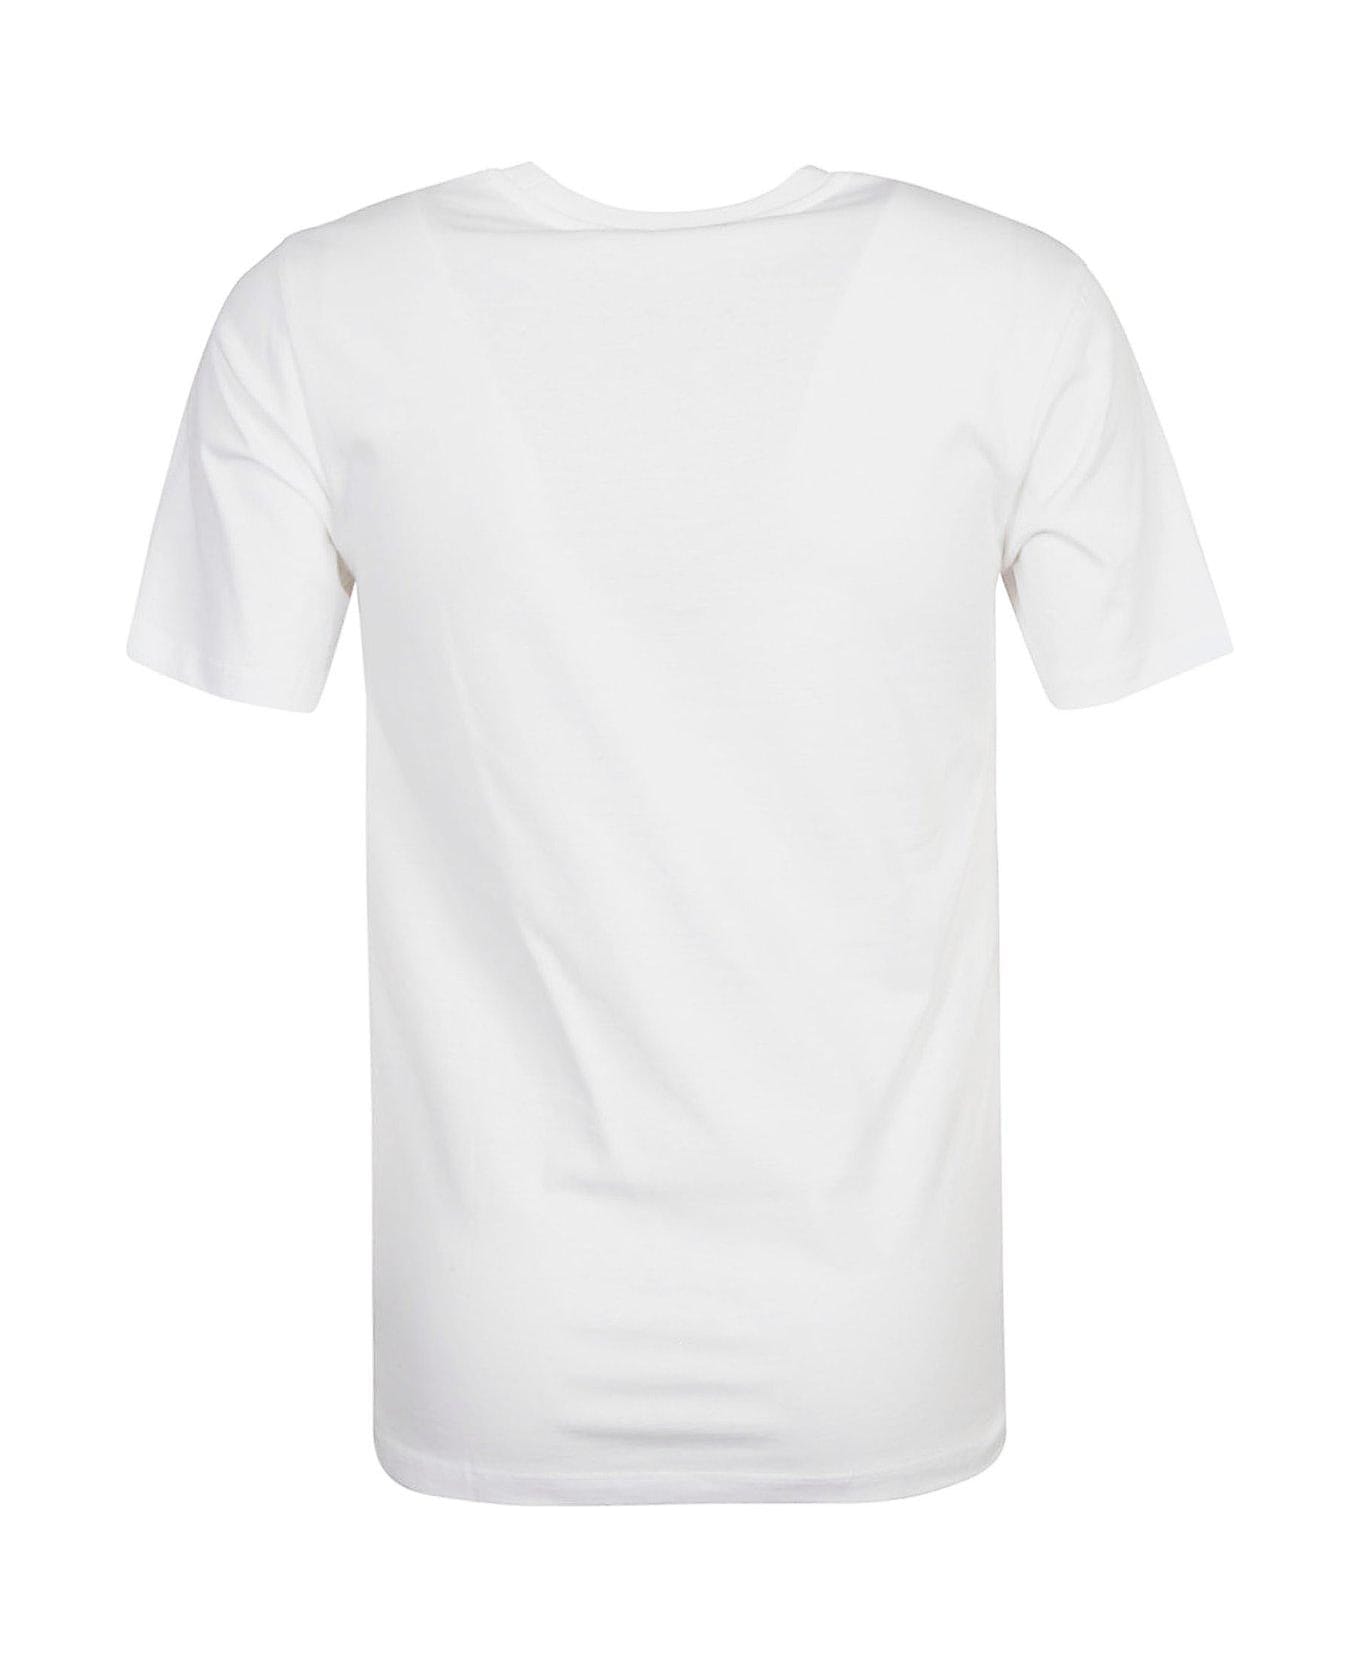 Paco Rabanne Logo Printed T-shirt - BIANCO